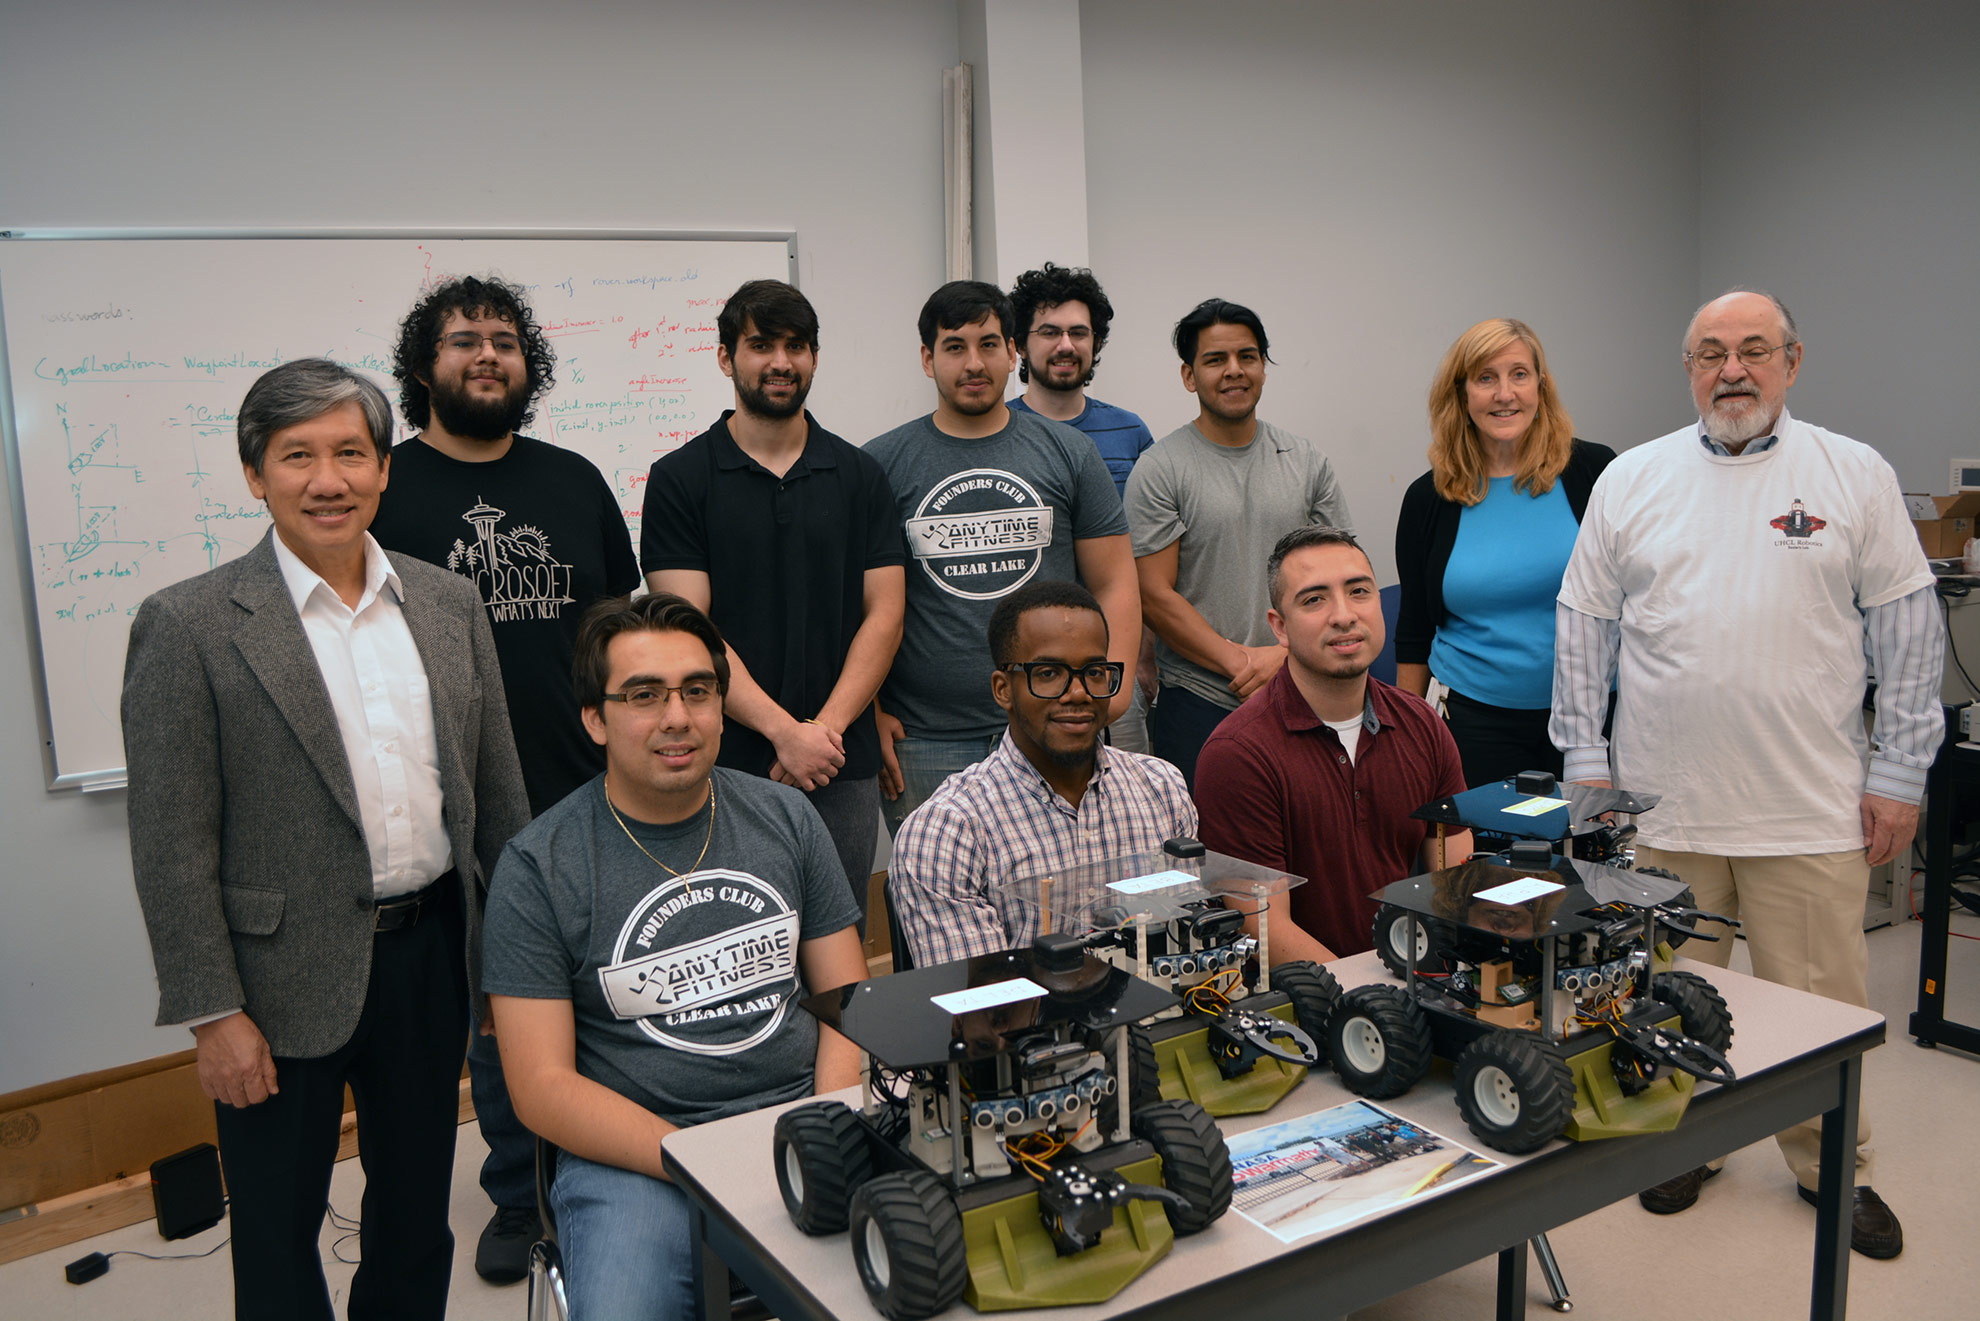 UHCL Swarmathon team pushing robotics to new frontiers